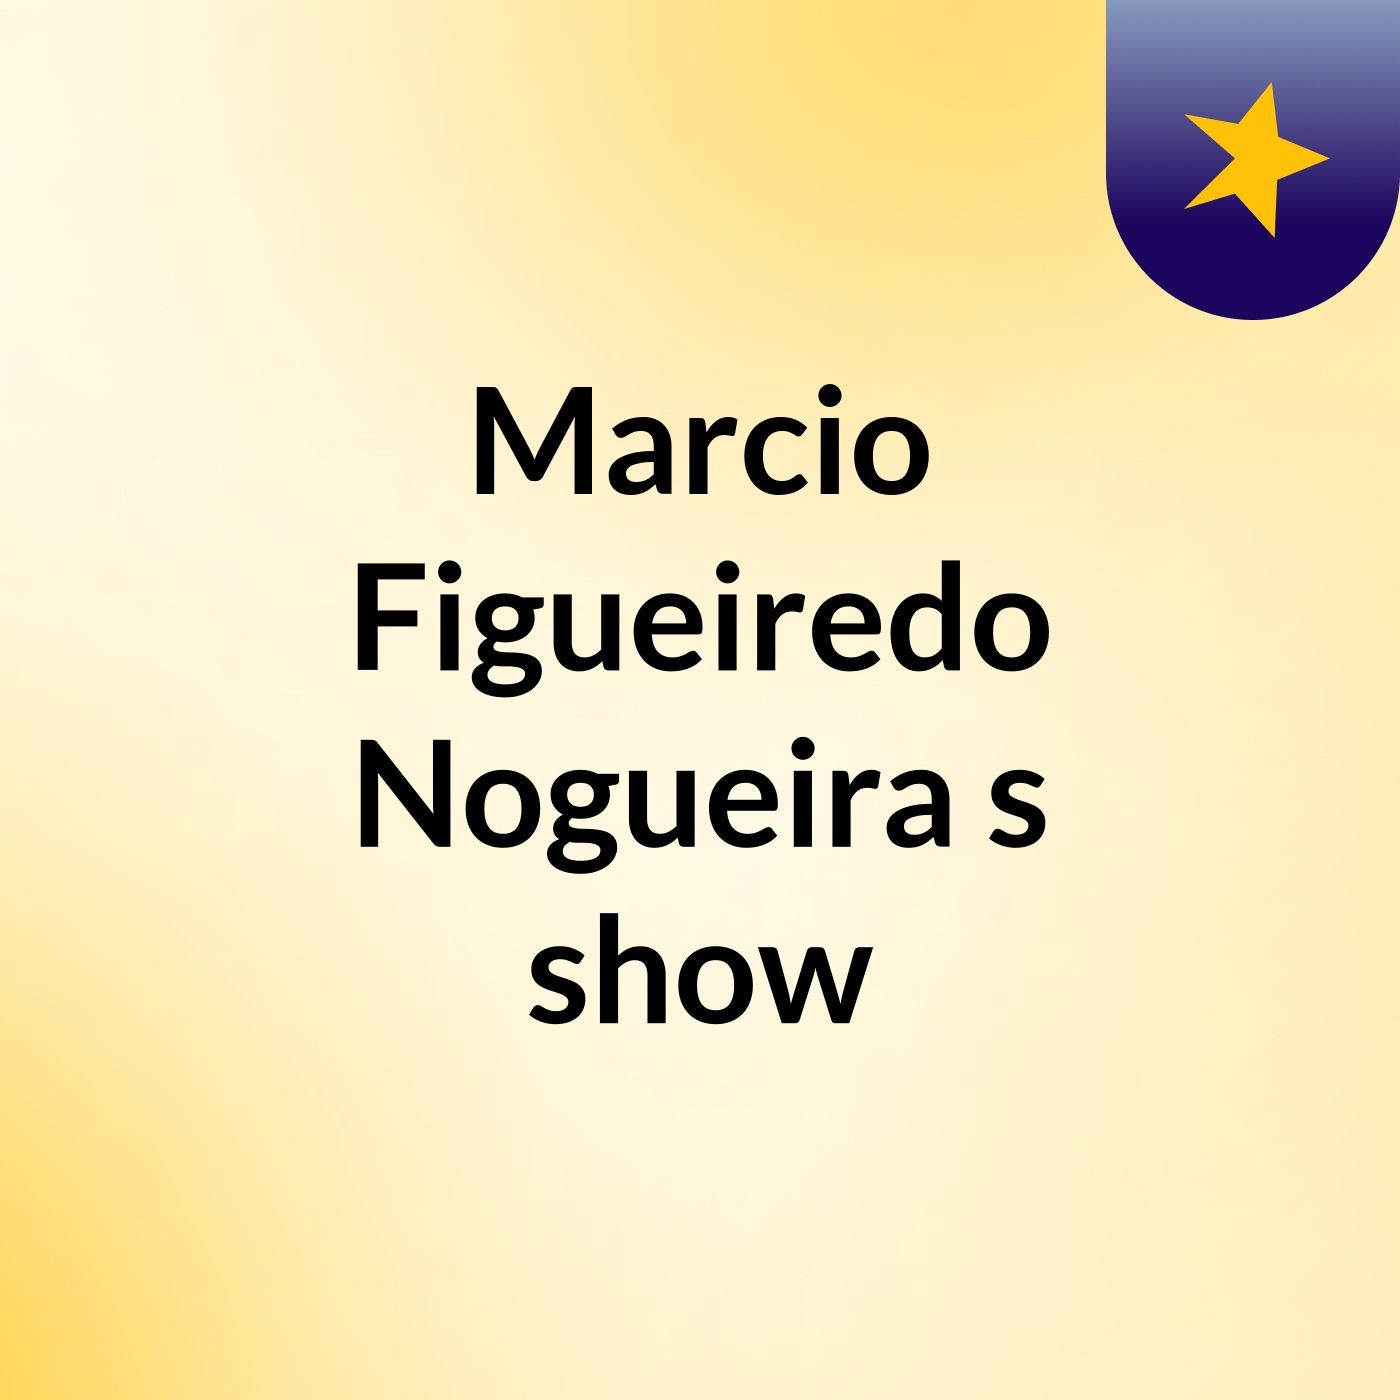 Marcio Figueiredo Nogueira's show